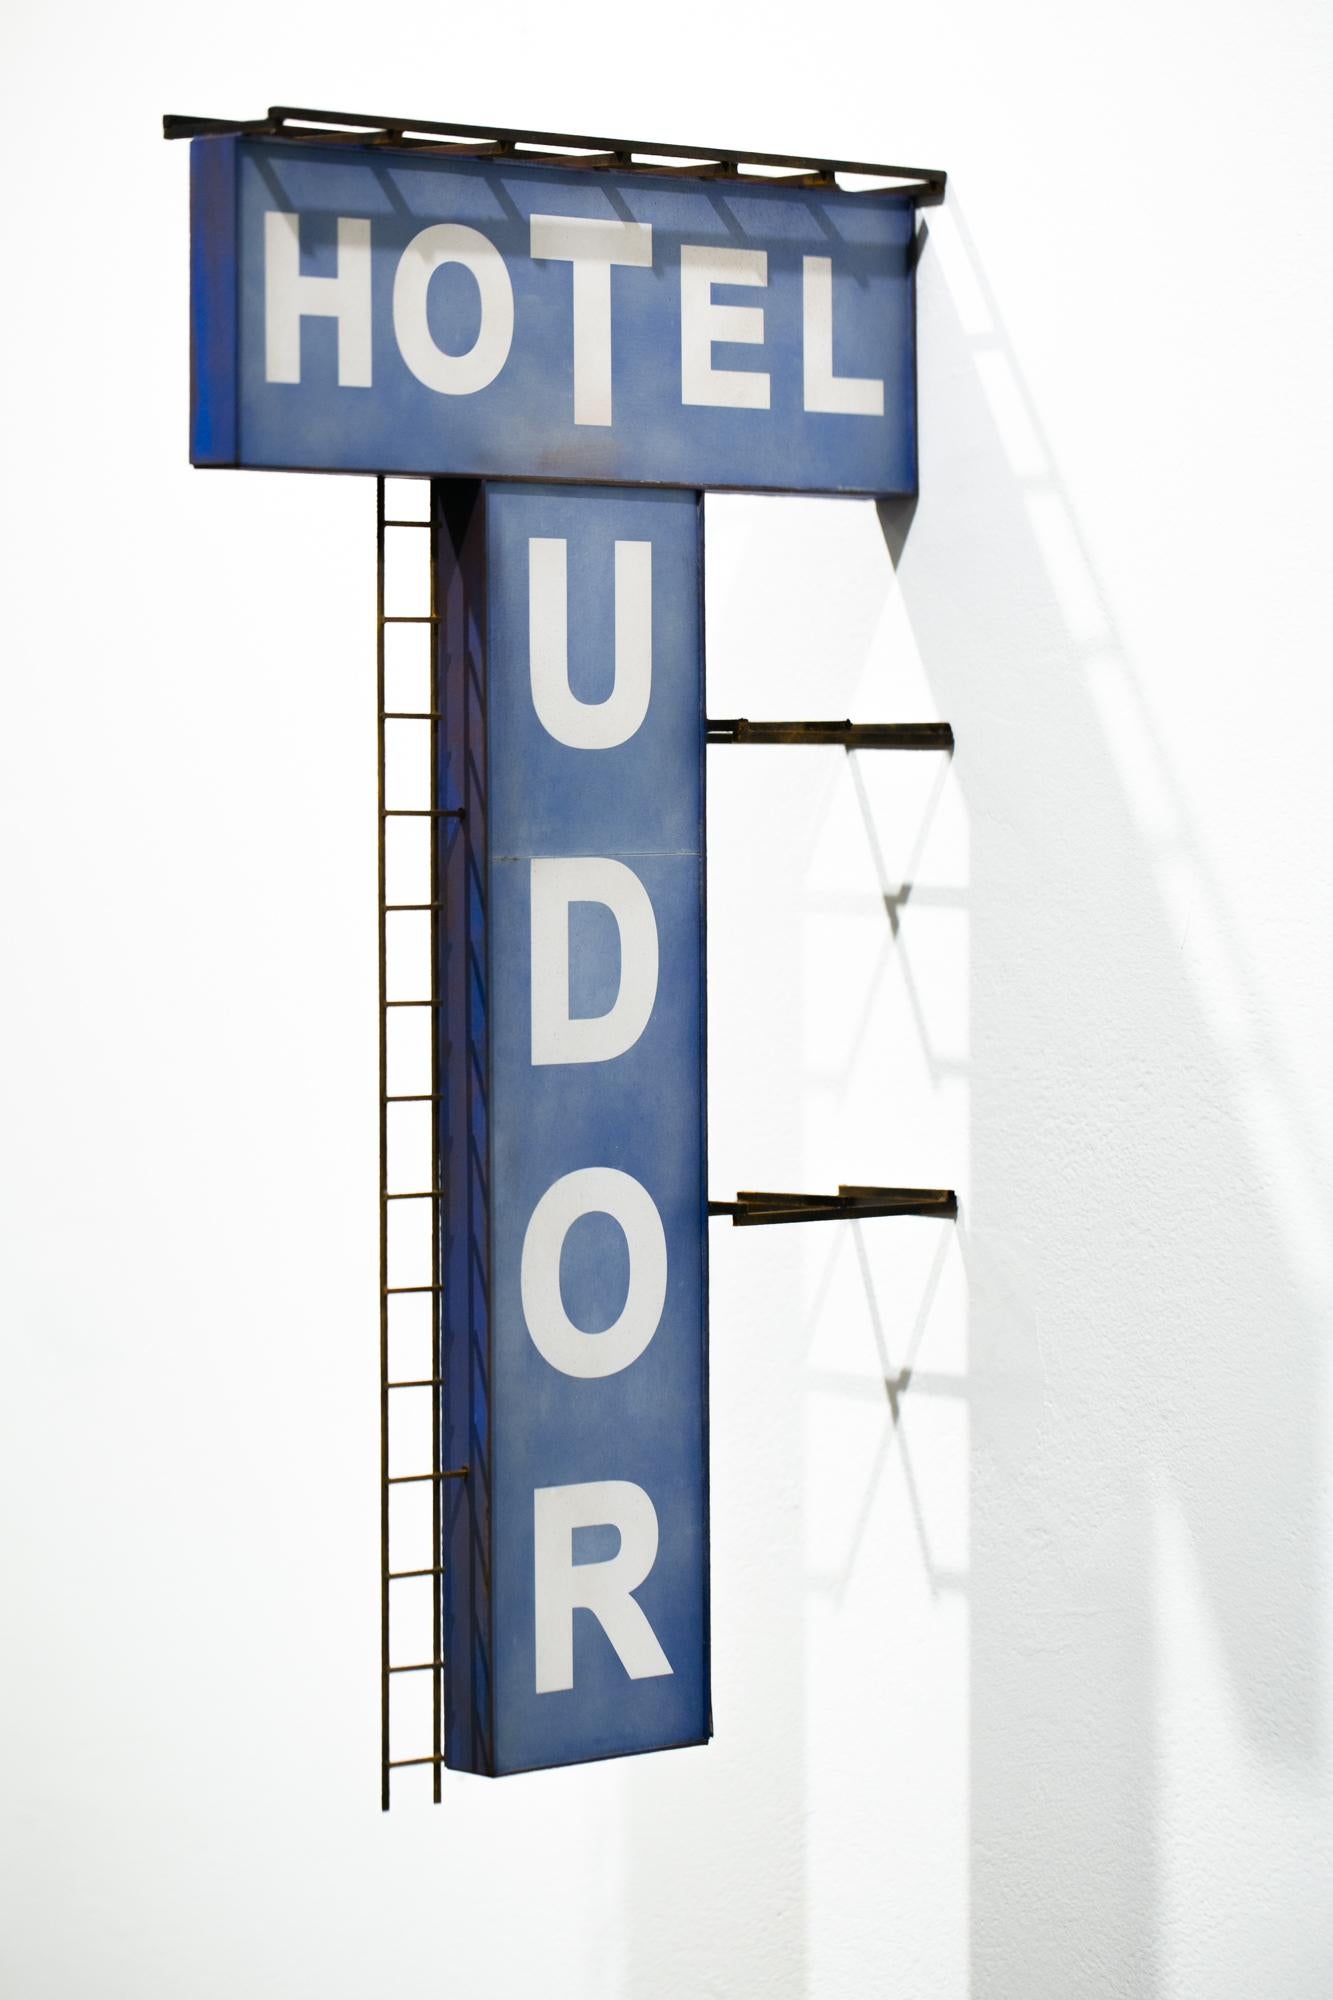 "Hotel Tudor", Miniature, Architecture, Sign, Cityscape, Sculpture, Blue, White